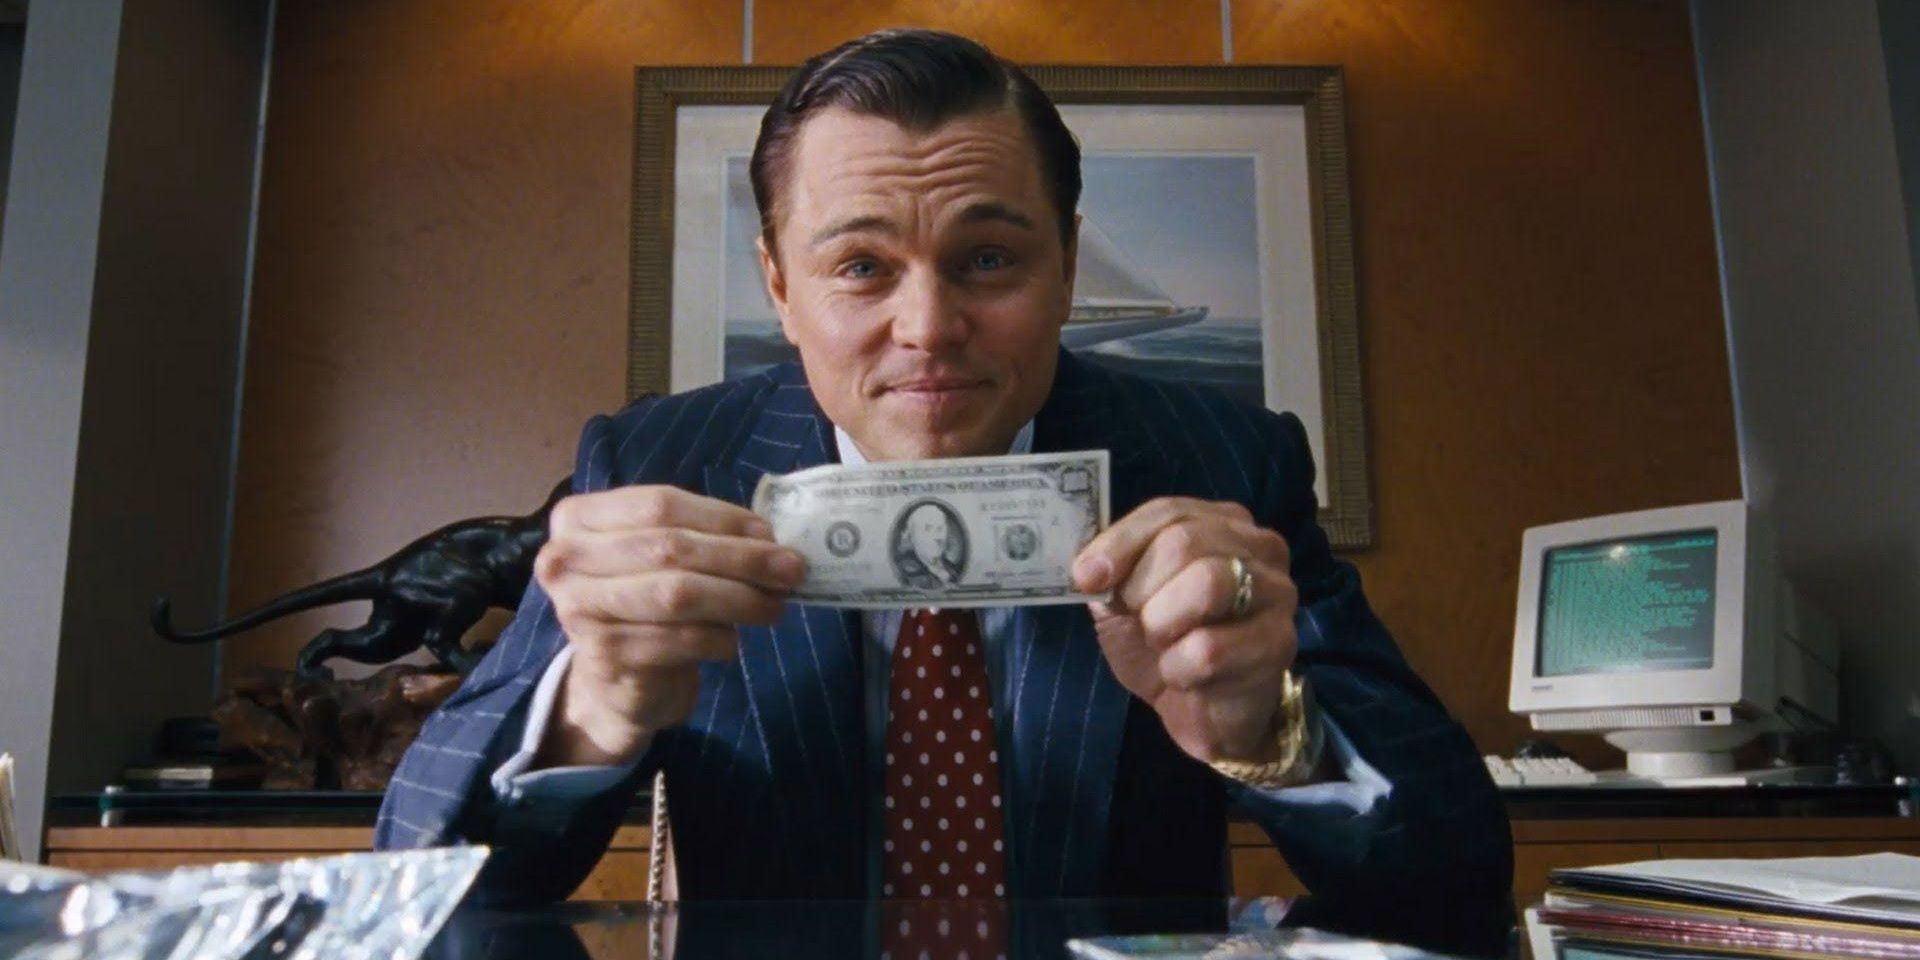 Jordan Belfort holding money in The Wolf of Wall Street